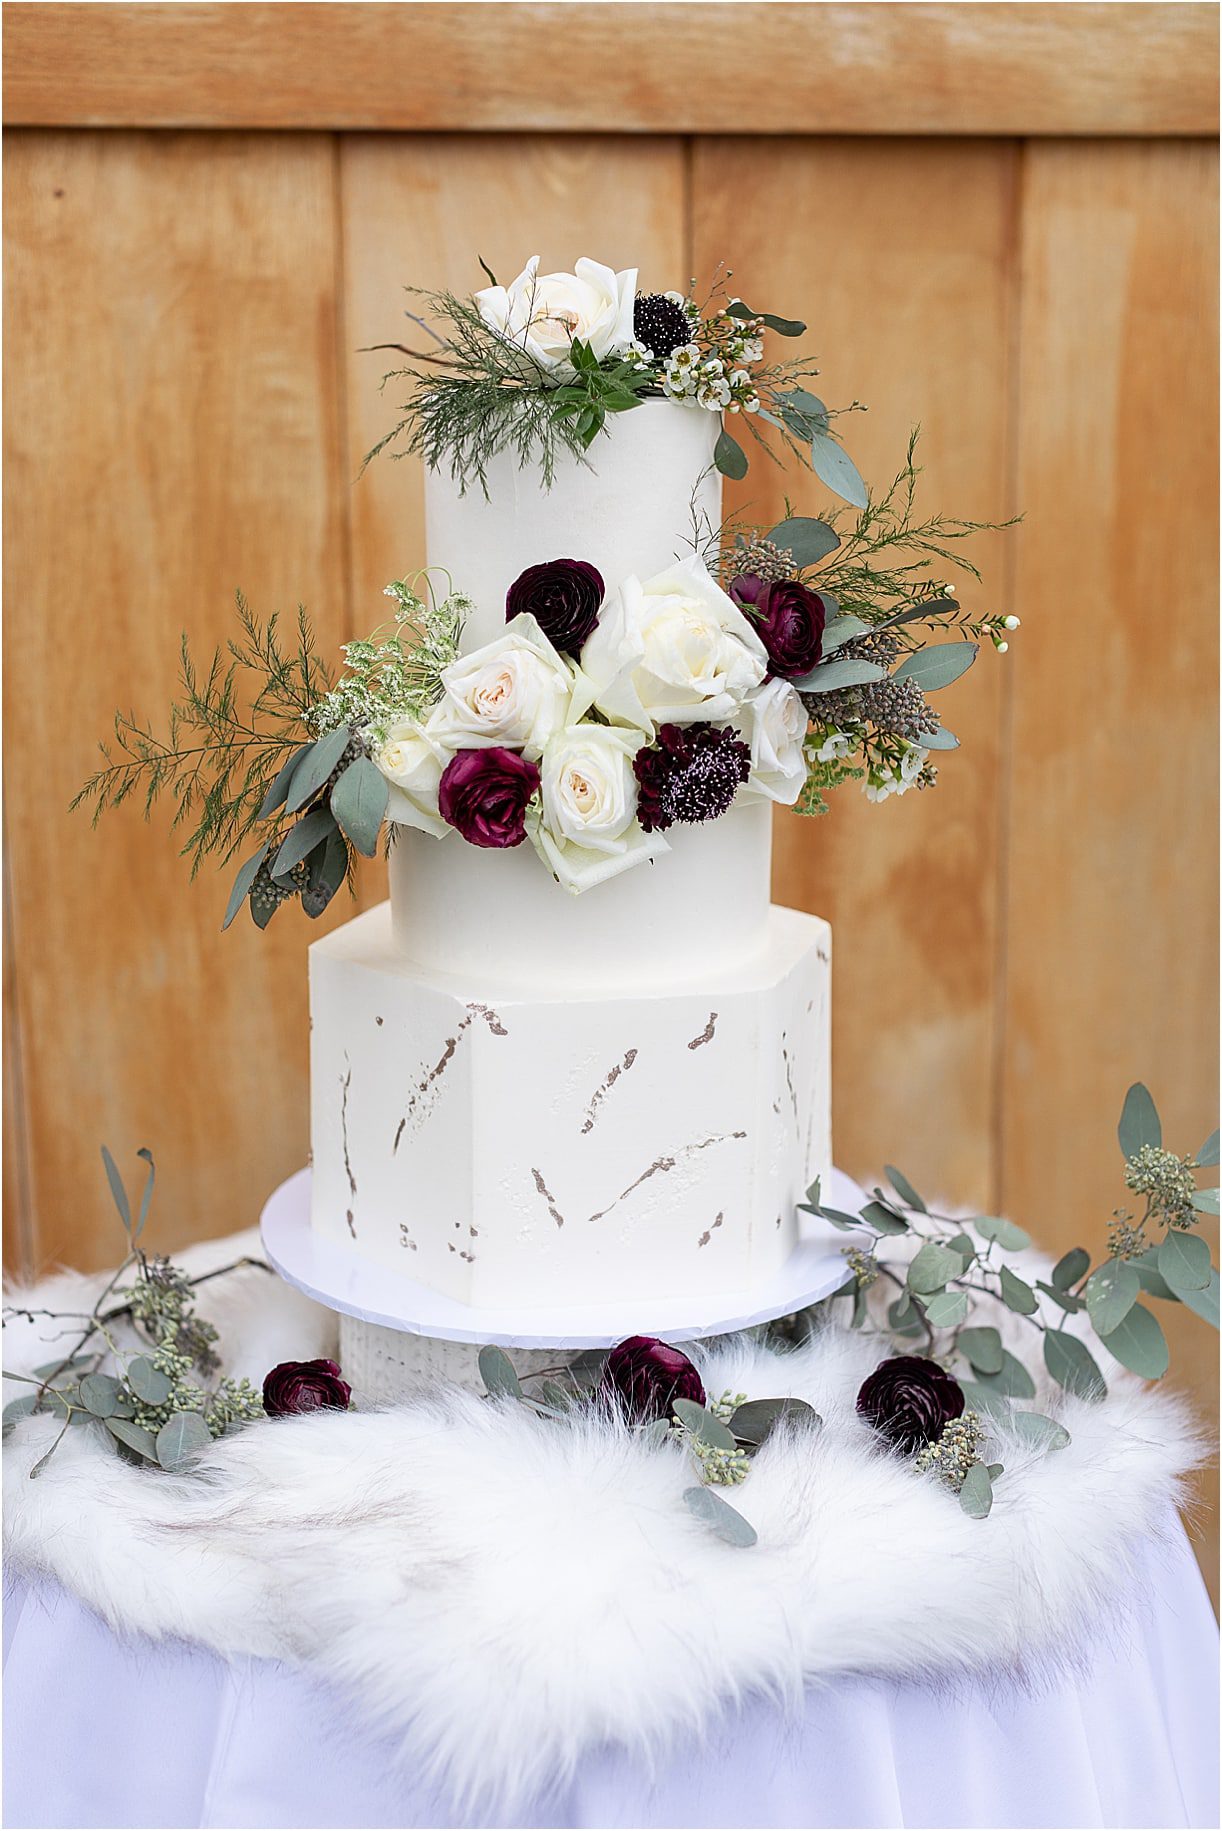 Steel Blue and Burgundy Virginia Wedding | Hill City Bride Wedding Ideas Blog Reception Cake